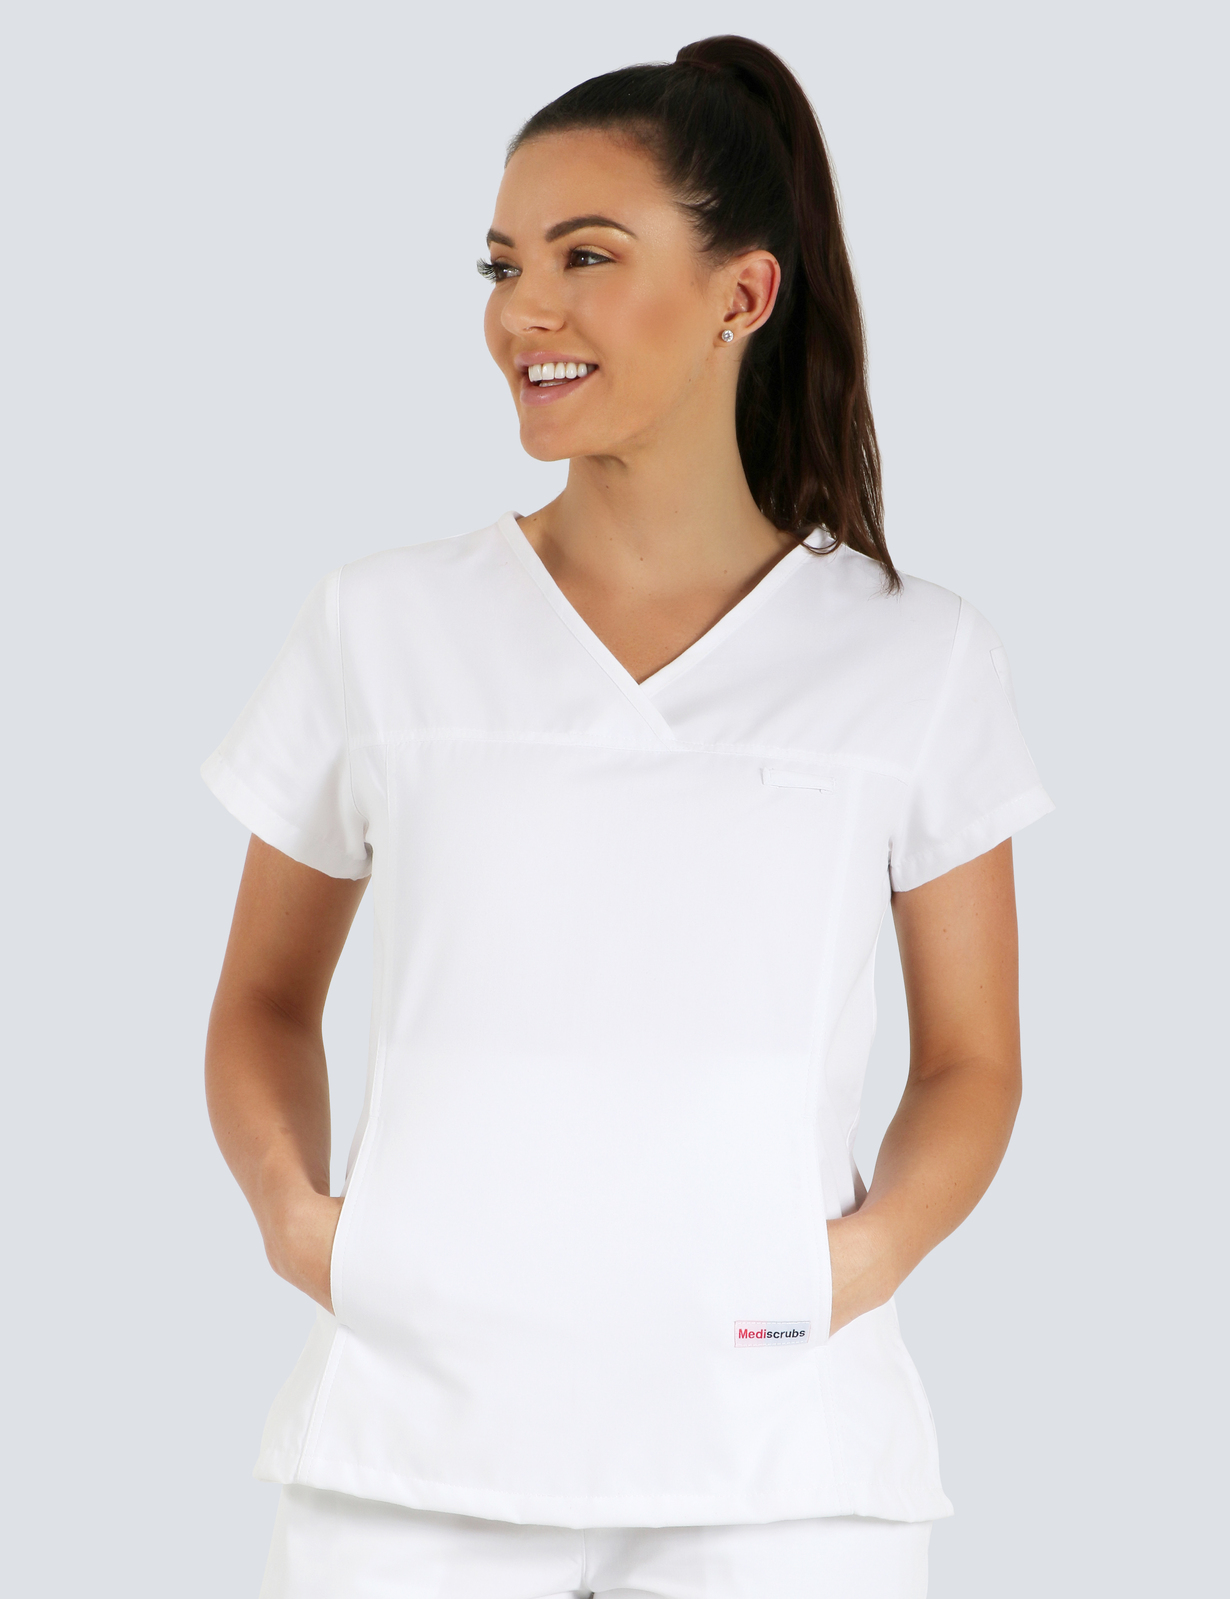 Queensland Children's Hospital Emergency Department Nurse Unit Manager Uniform Top Bundle  (Women's Fit Top in White incl Logos)